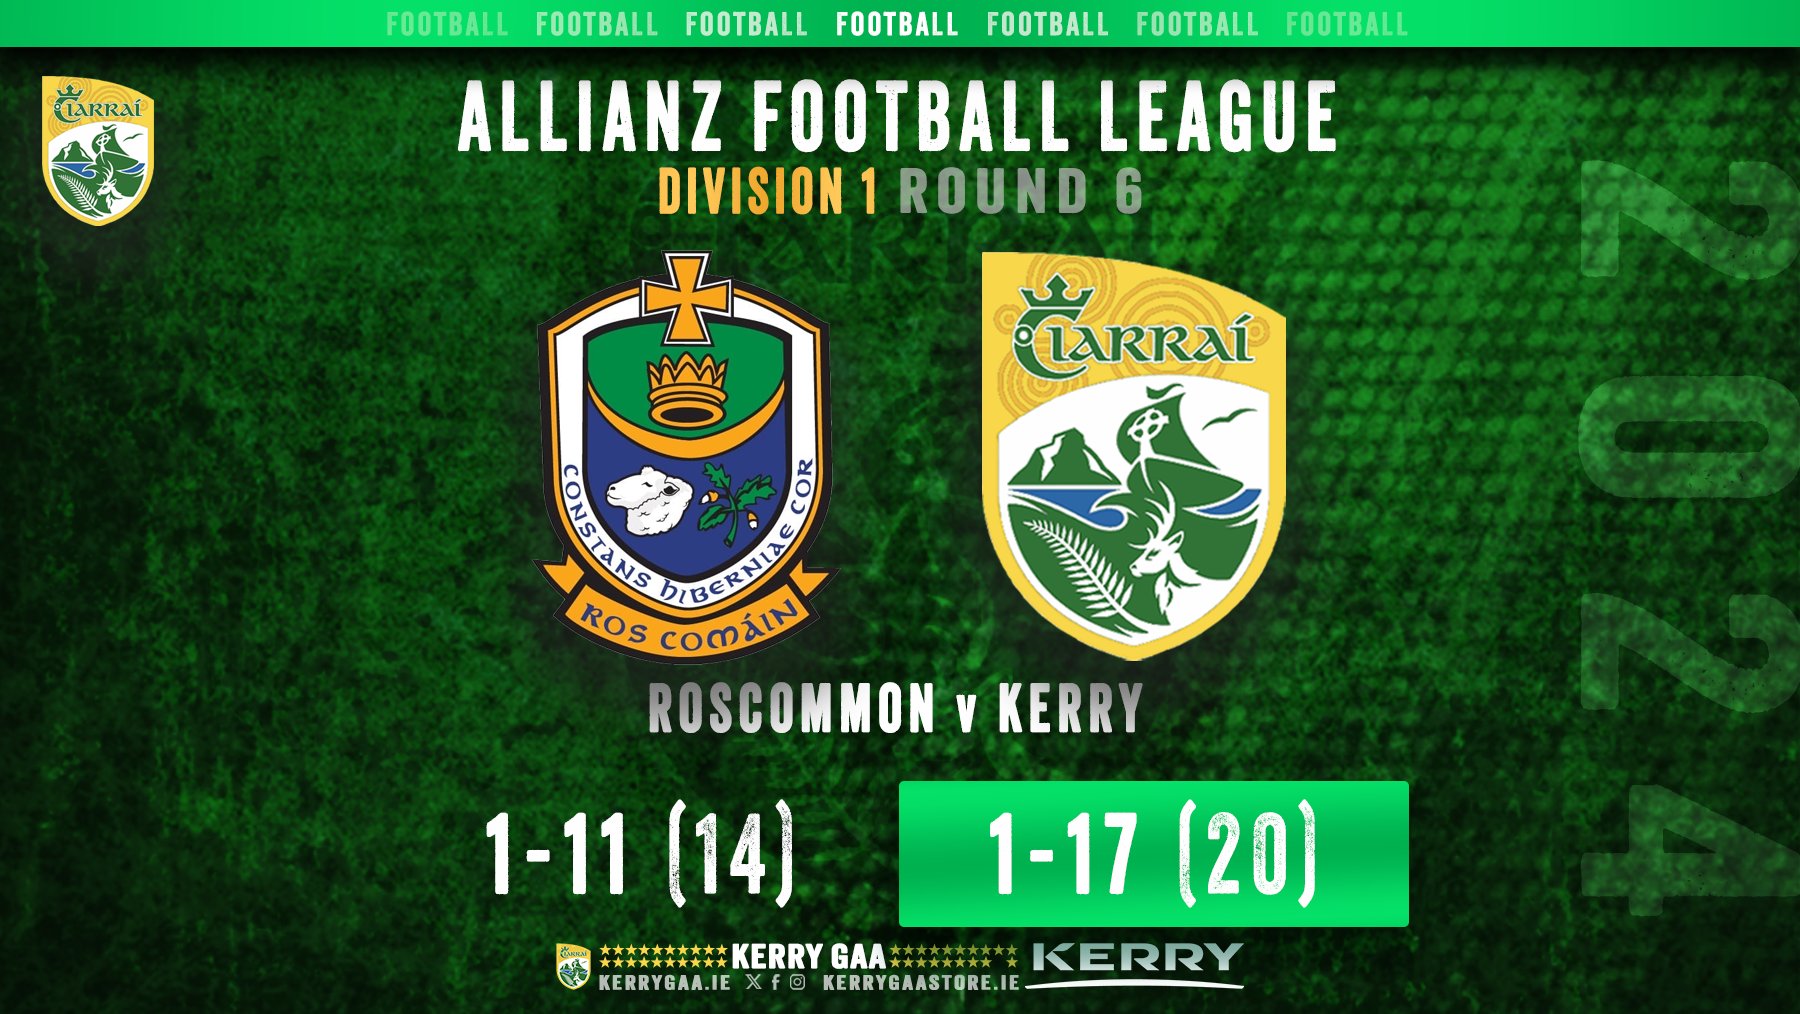 Kerry defeat Roscommon in Allianz Football League